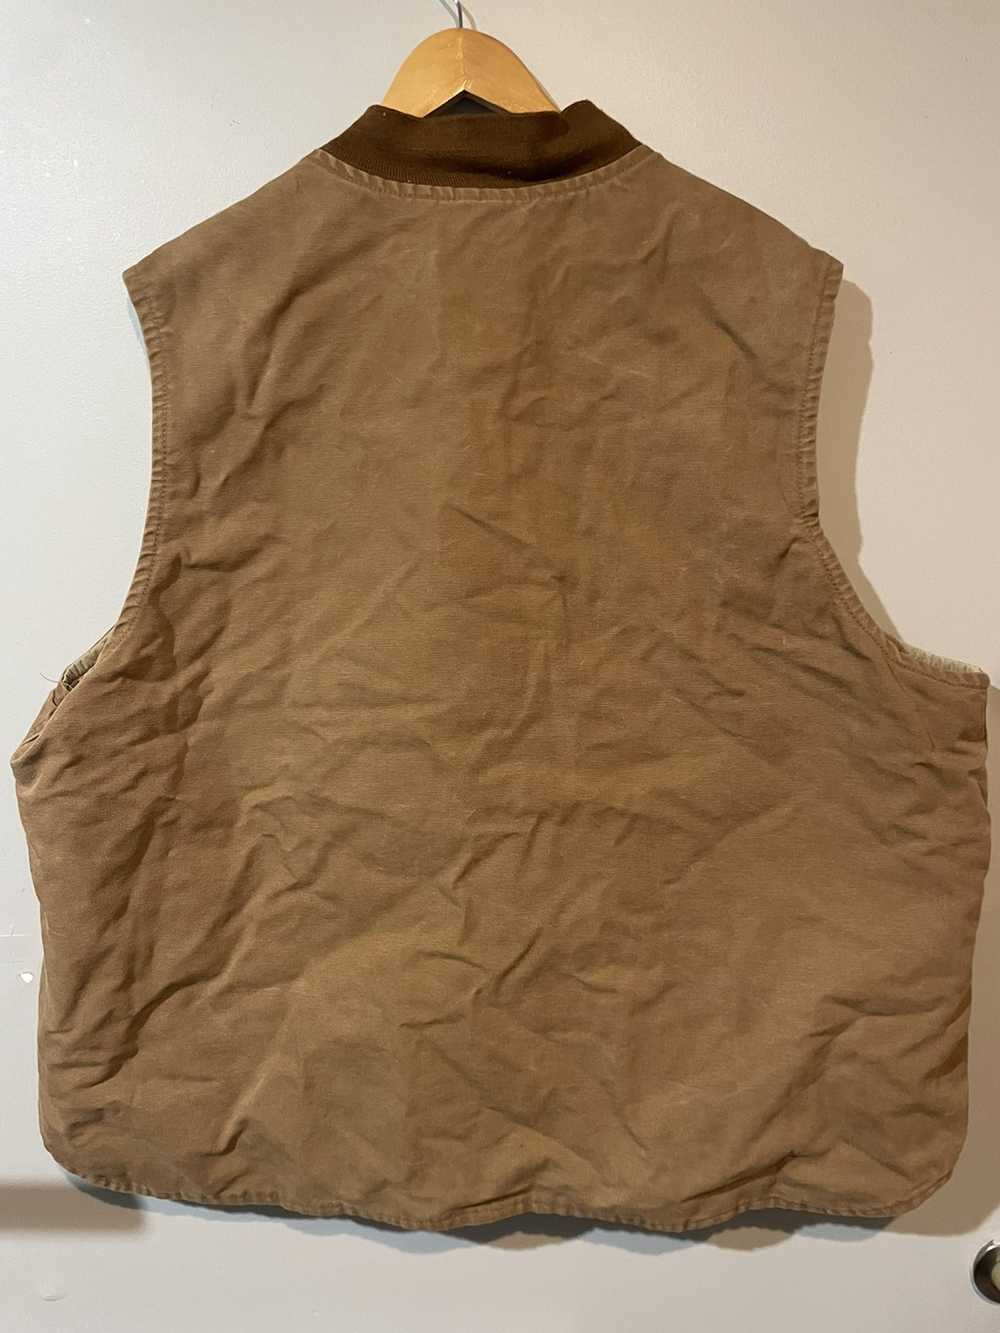 Carhartt Vintage Distressed Brown Carhartt Vest - image 2